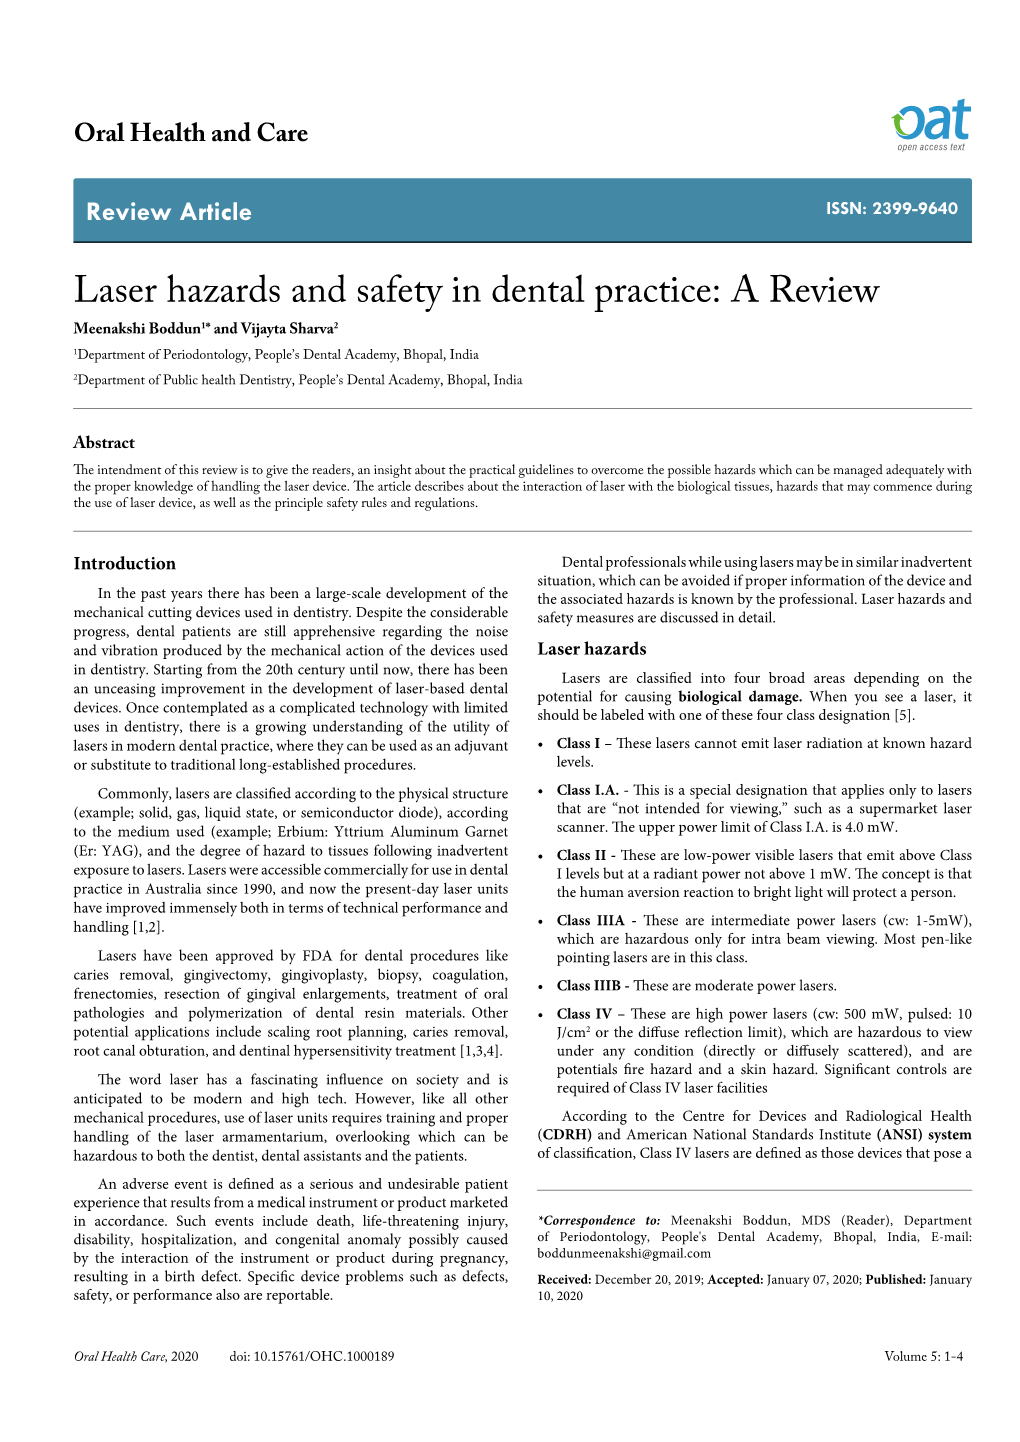 Laser Hazards and Safety in Dental Practice